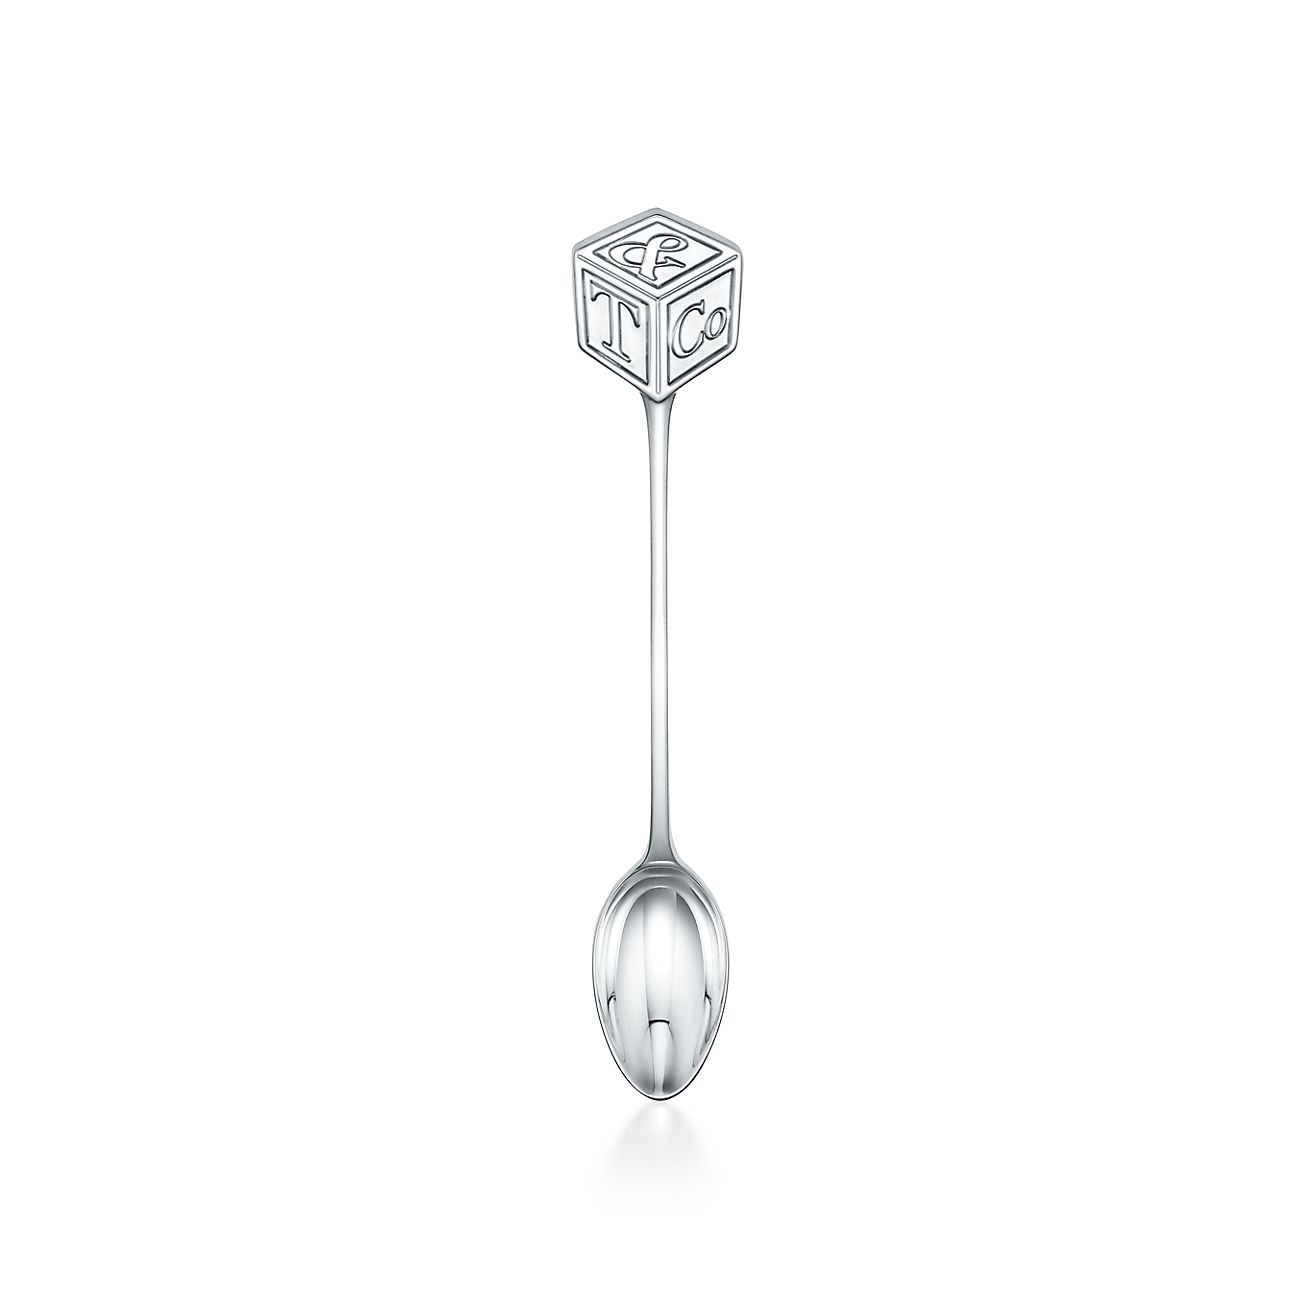 silver baby spoon tiffany